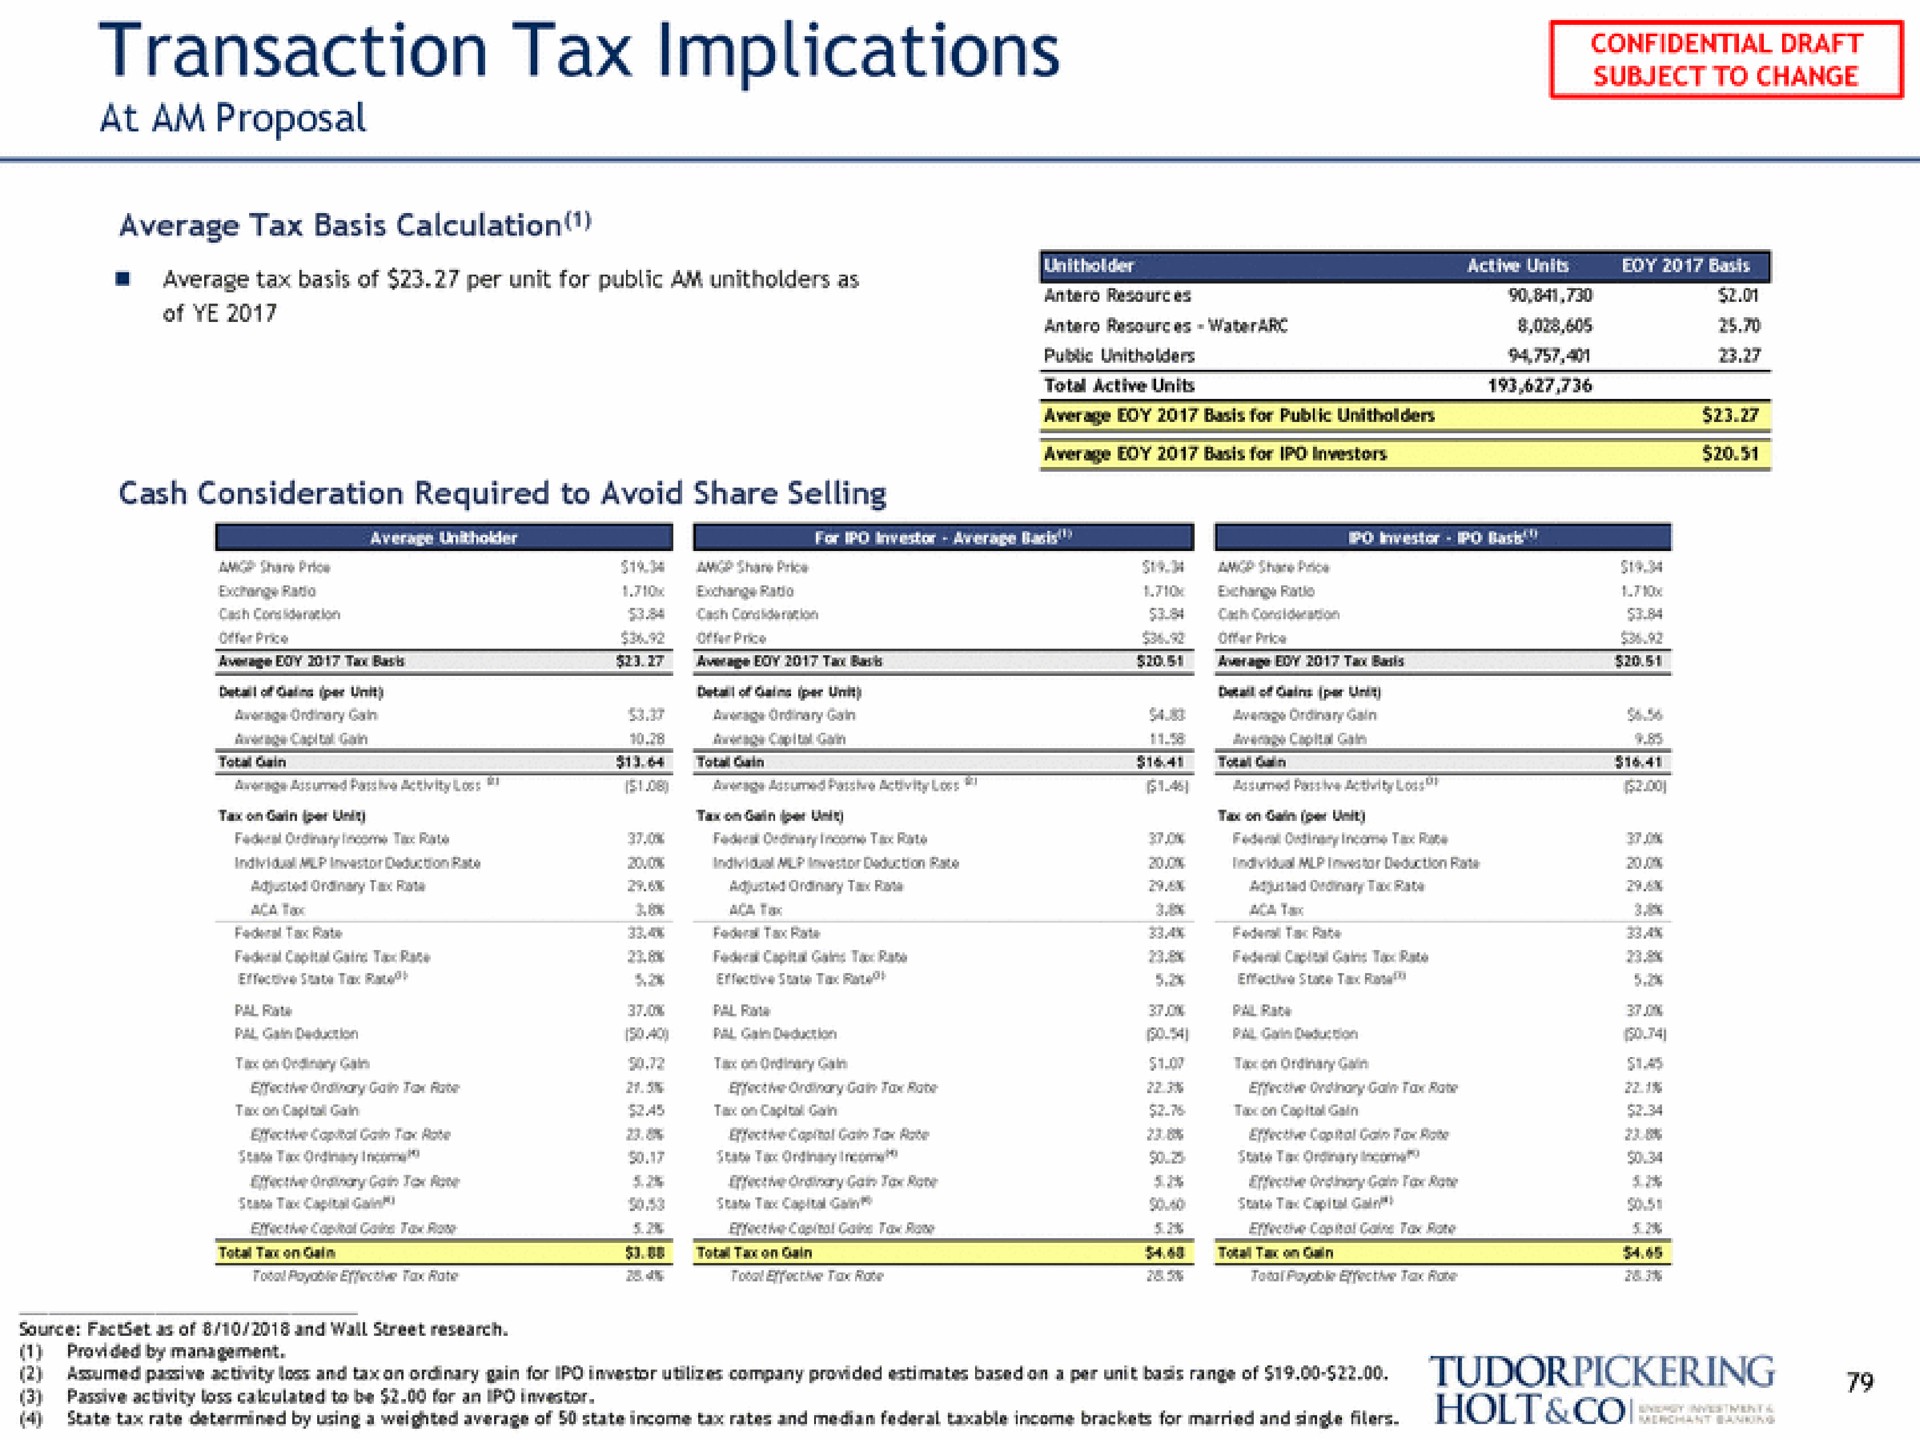 transaction tax implications holt see | Tudor, Pickering, Holt & Co